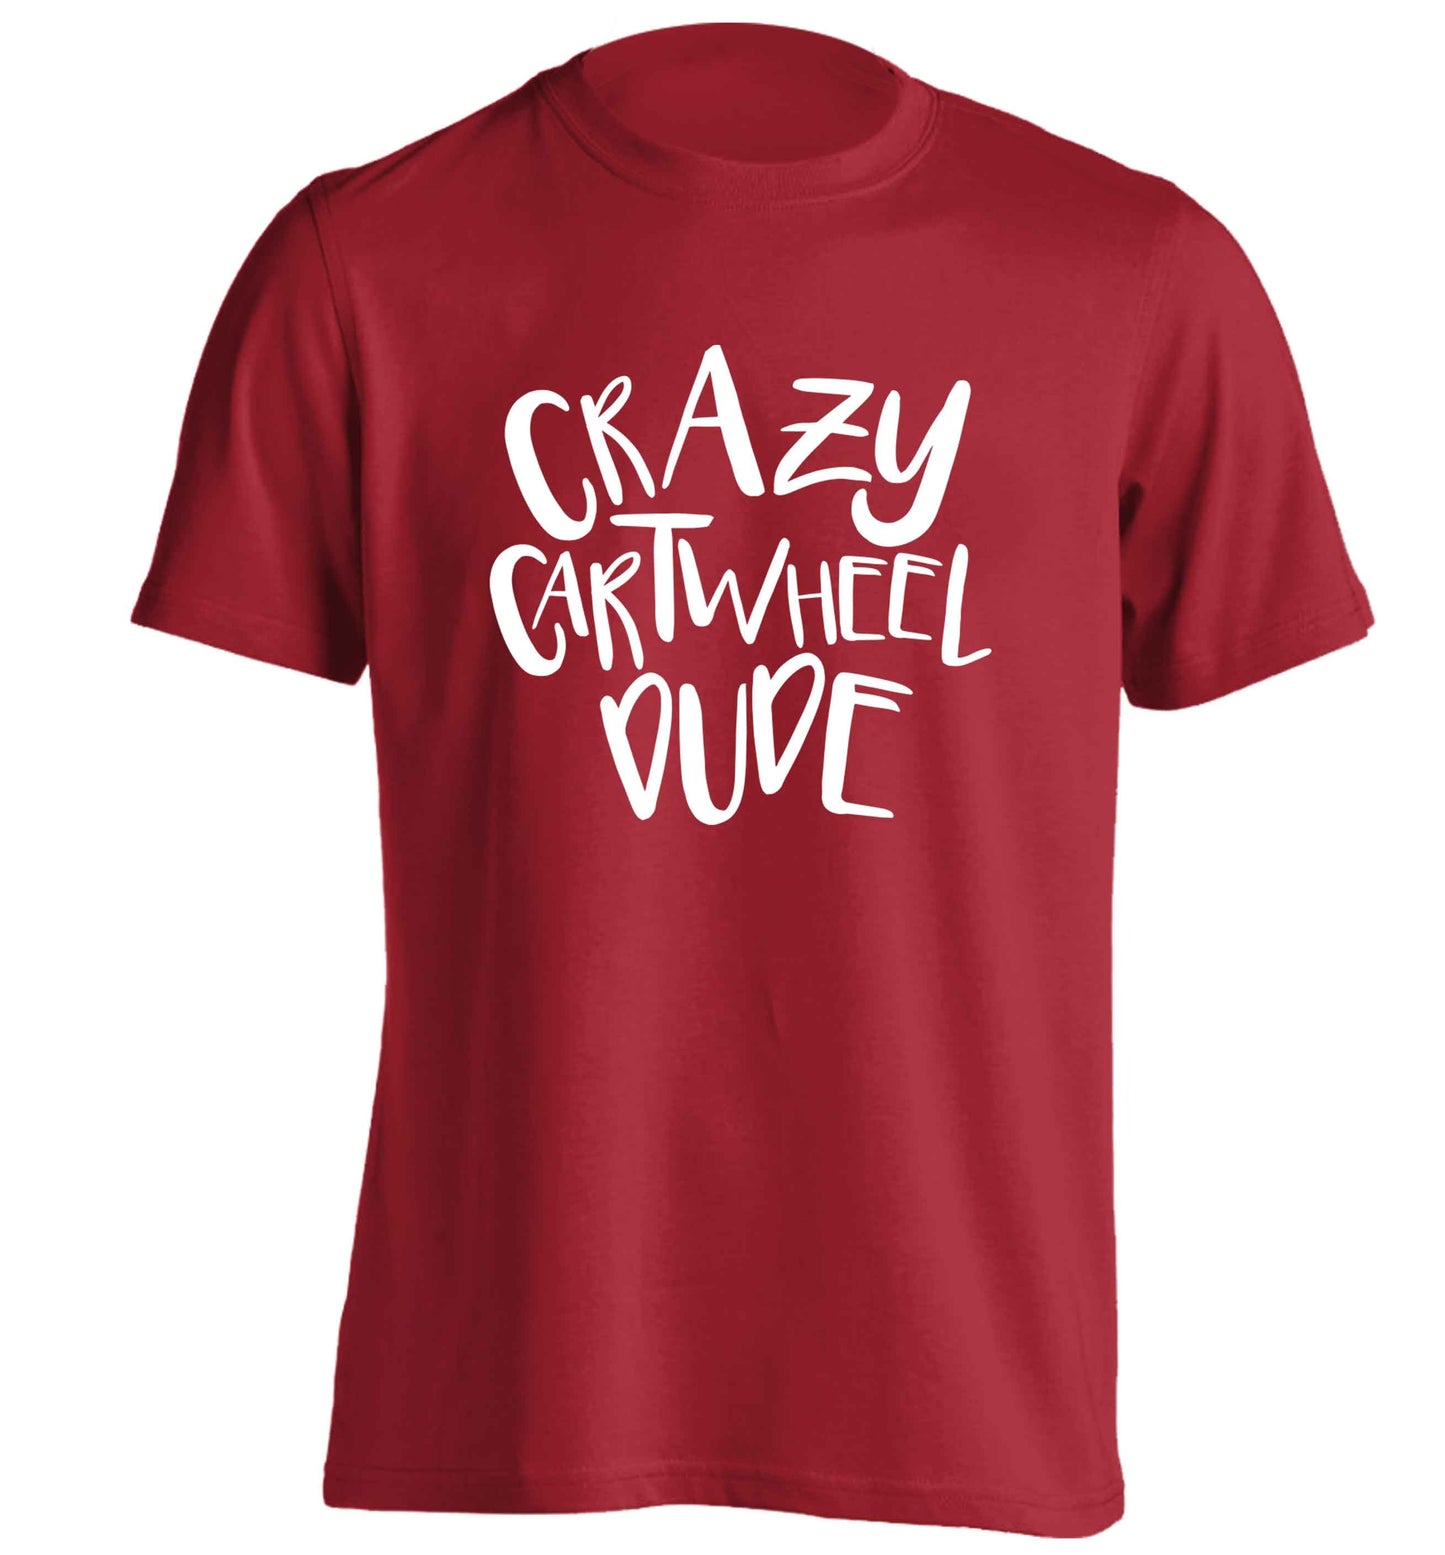 Crazy cartwheel dude adults unisex red Tshirt 2XL